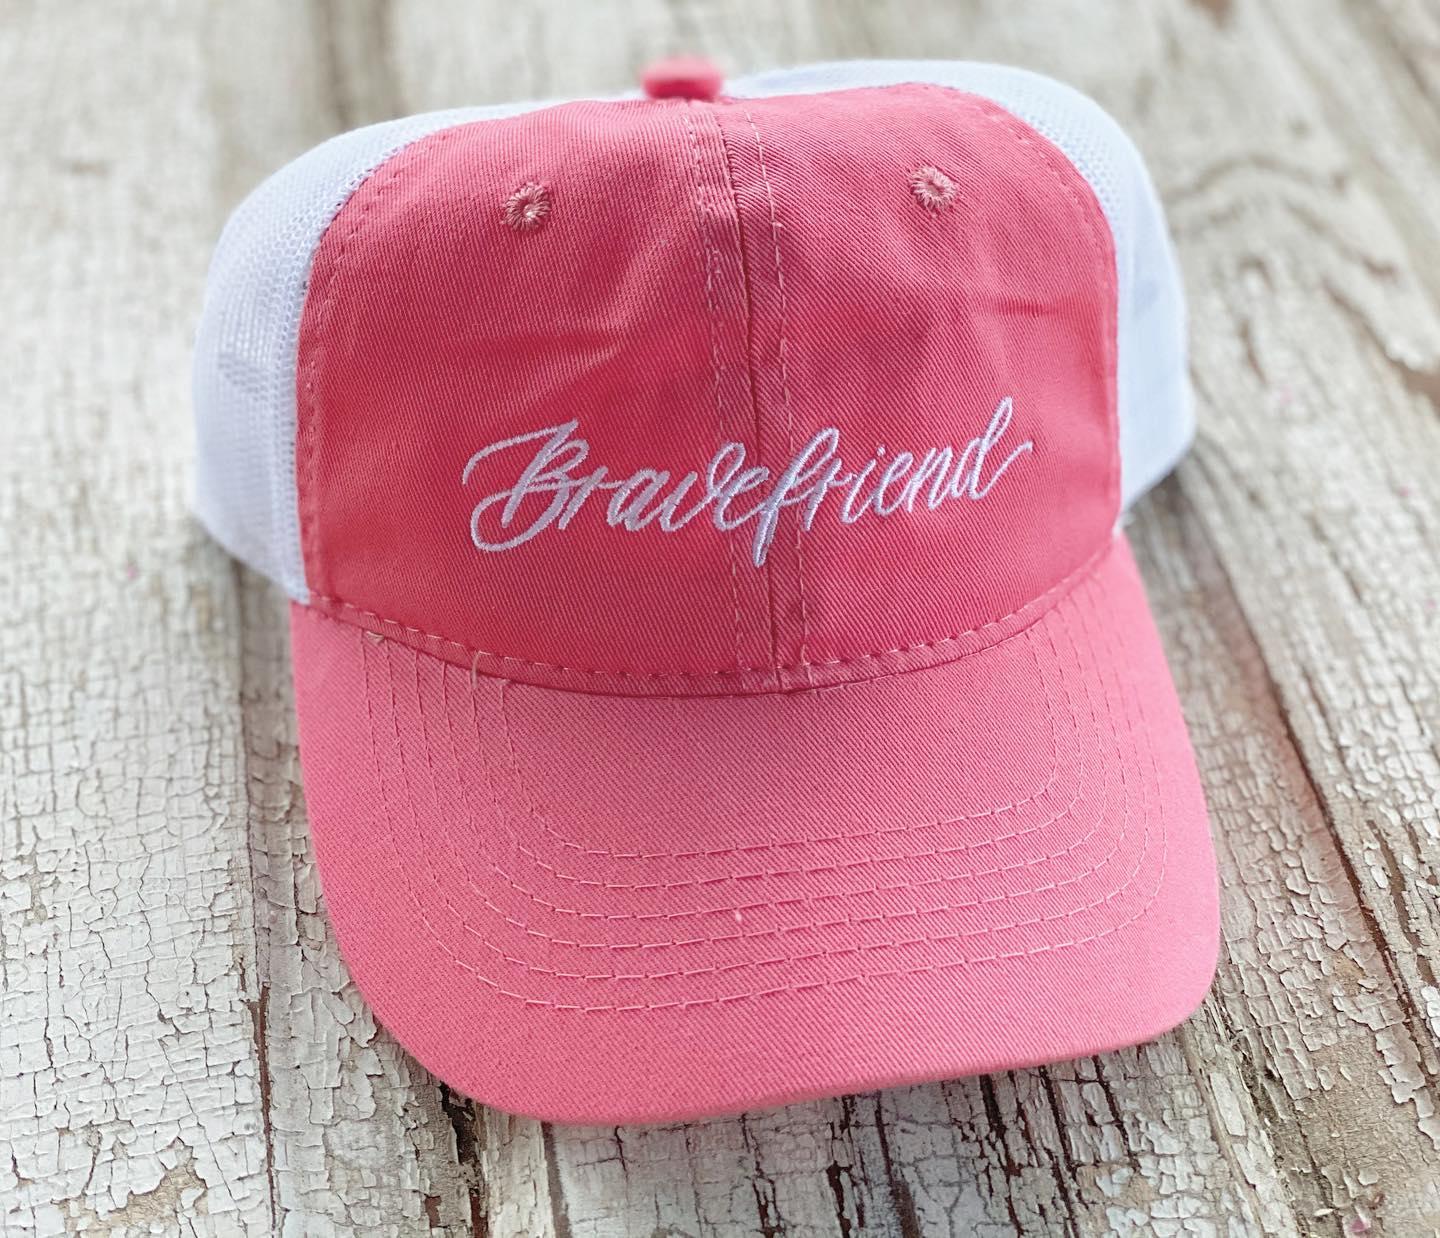 Hats | Bravefriend Apparel and Design